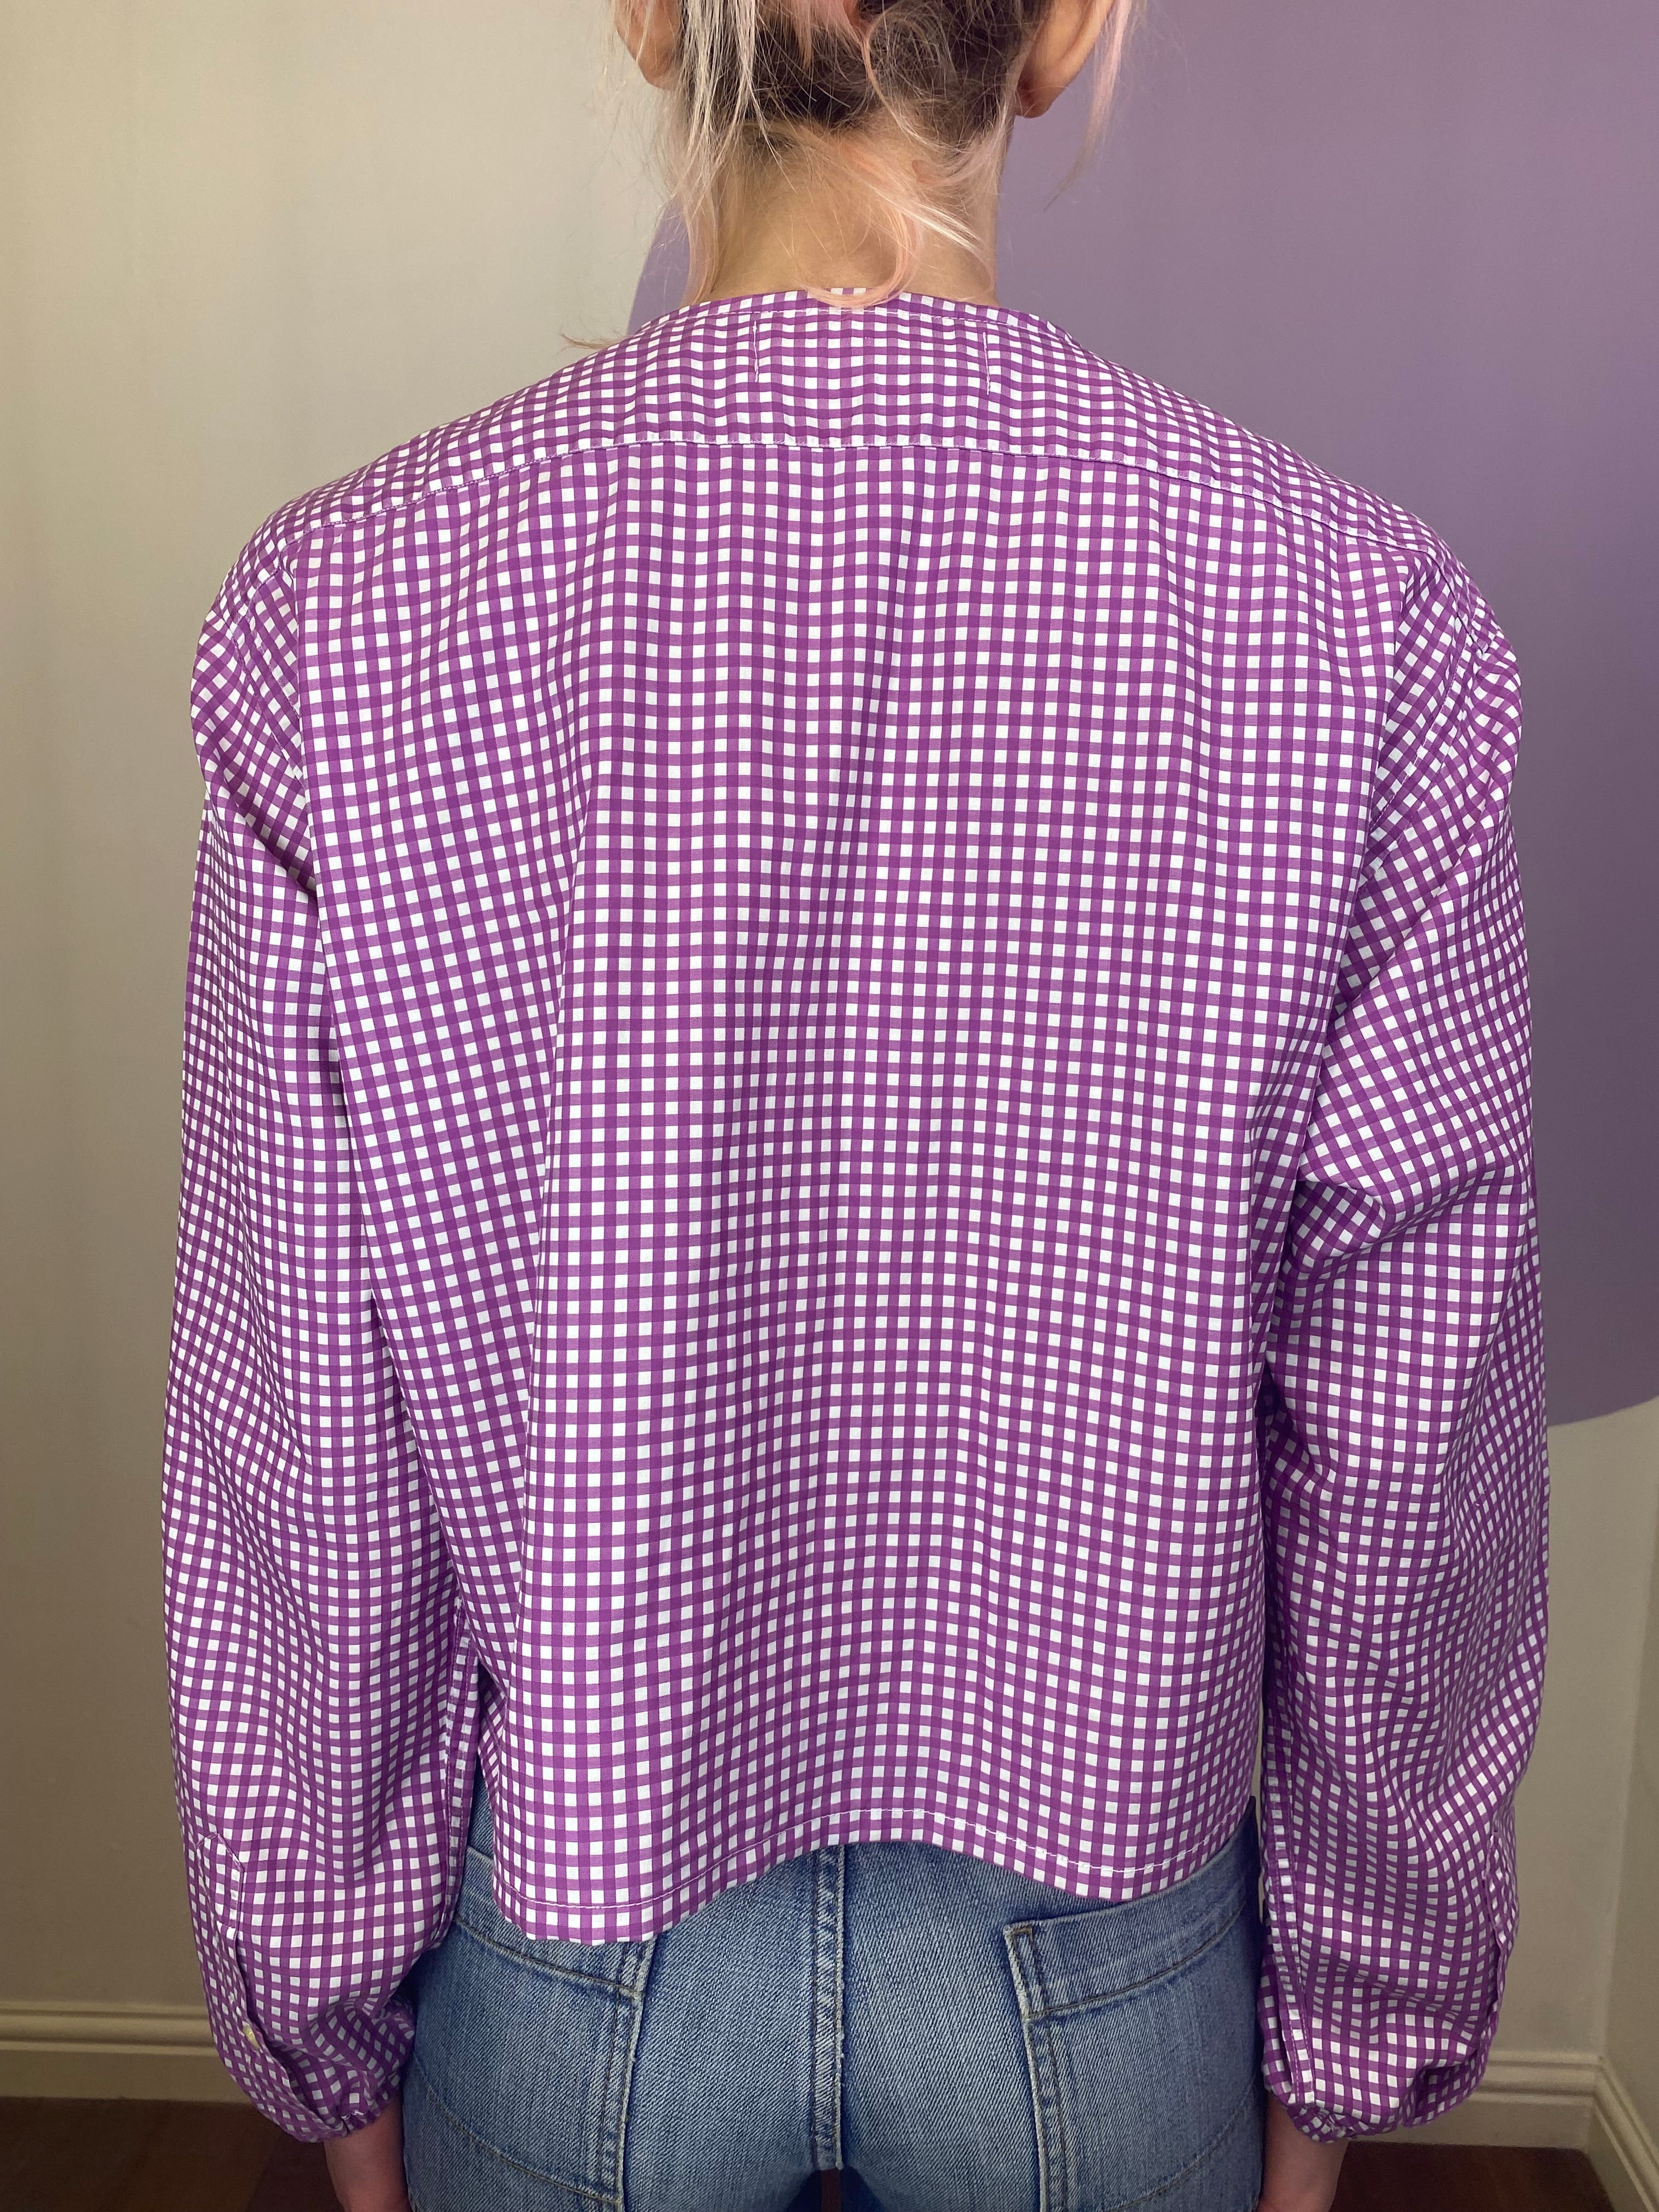 Hollie Shirt in Purple Gingham